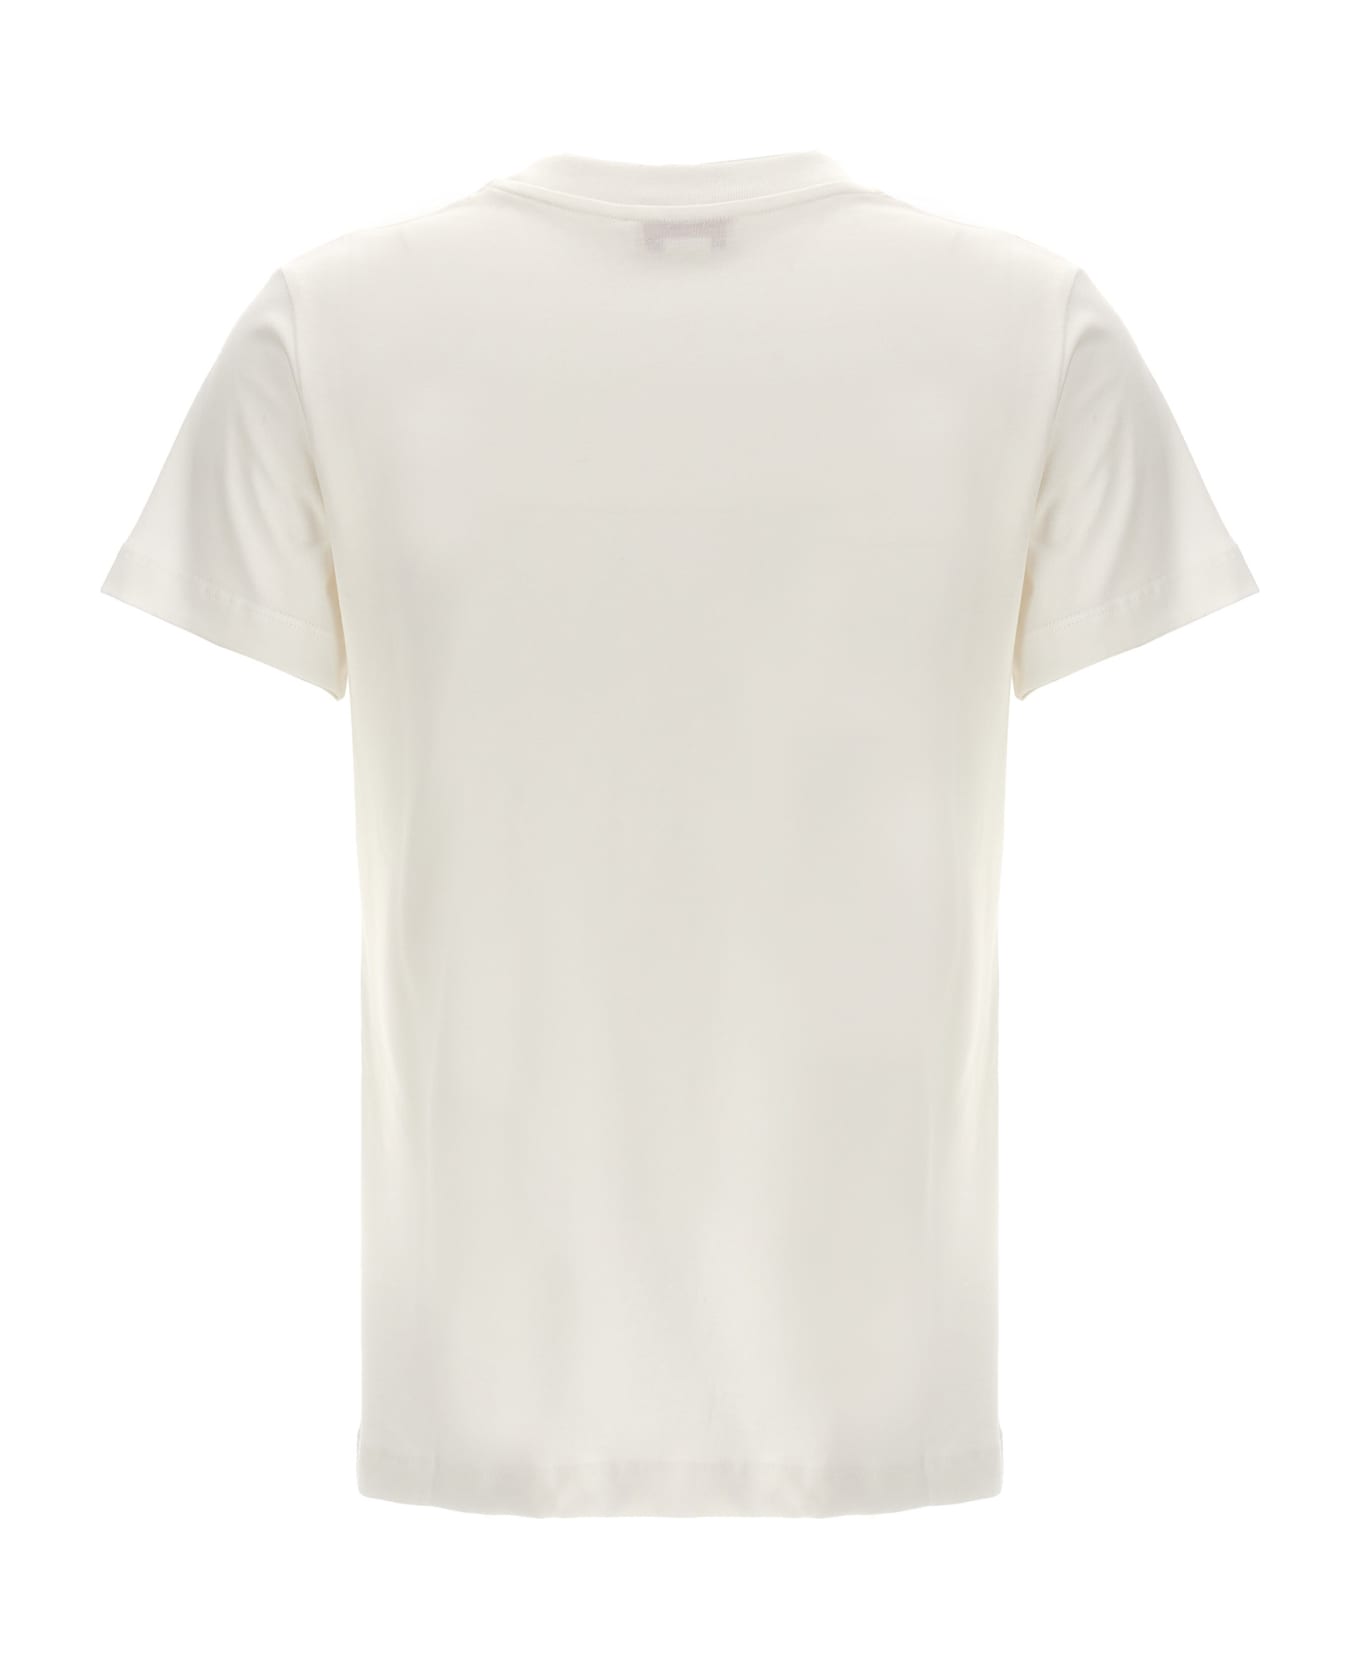 Alexander McQueen Cut And Sew T-shirt - White